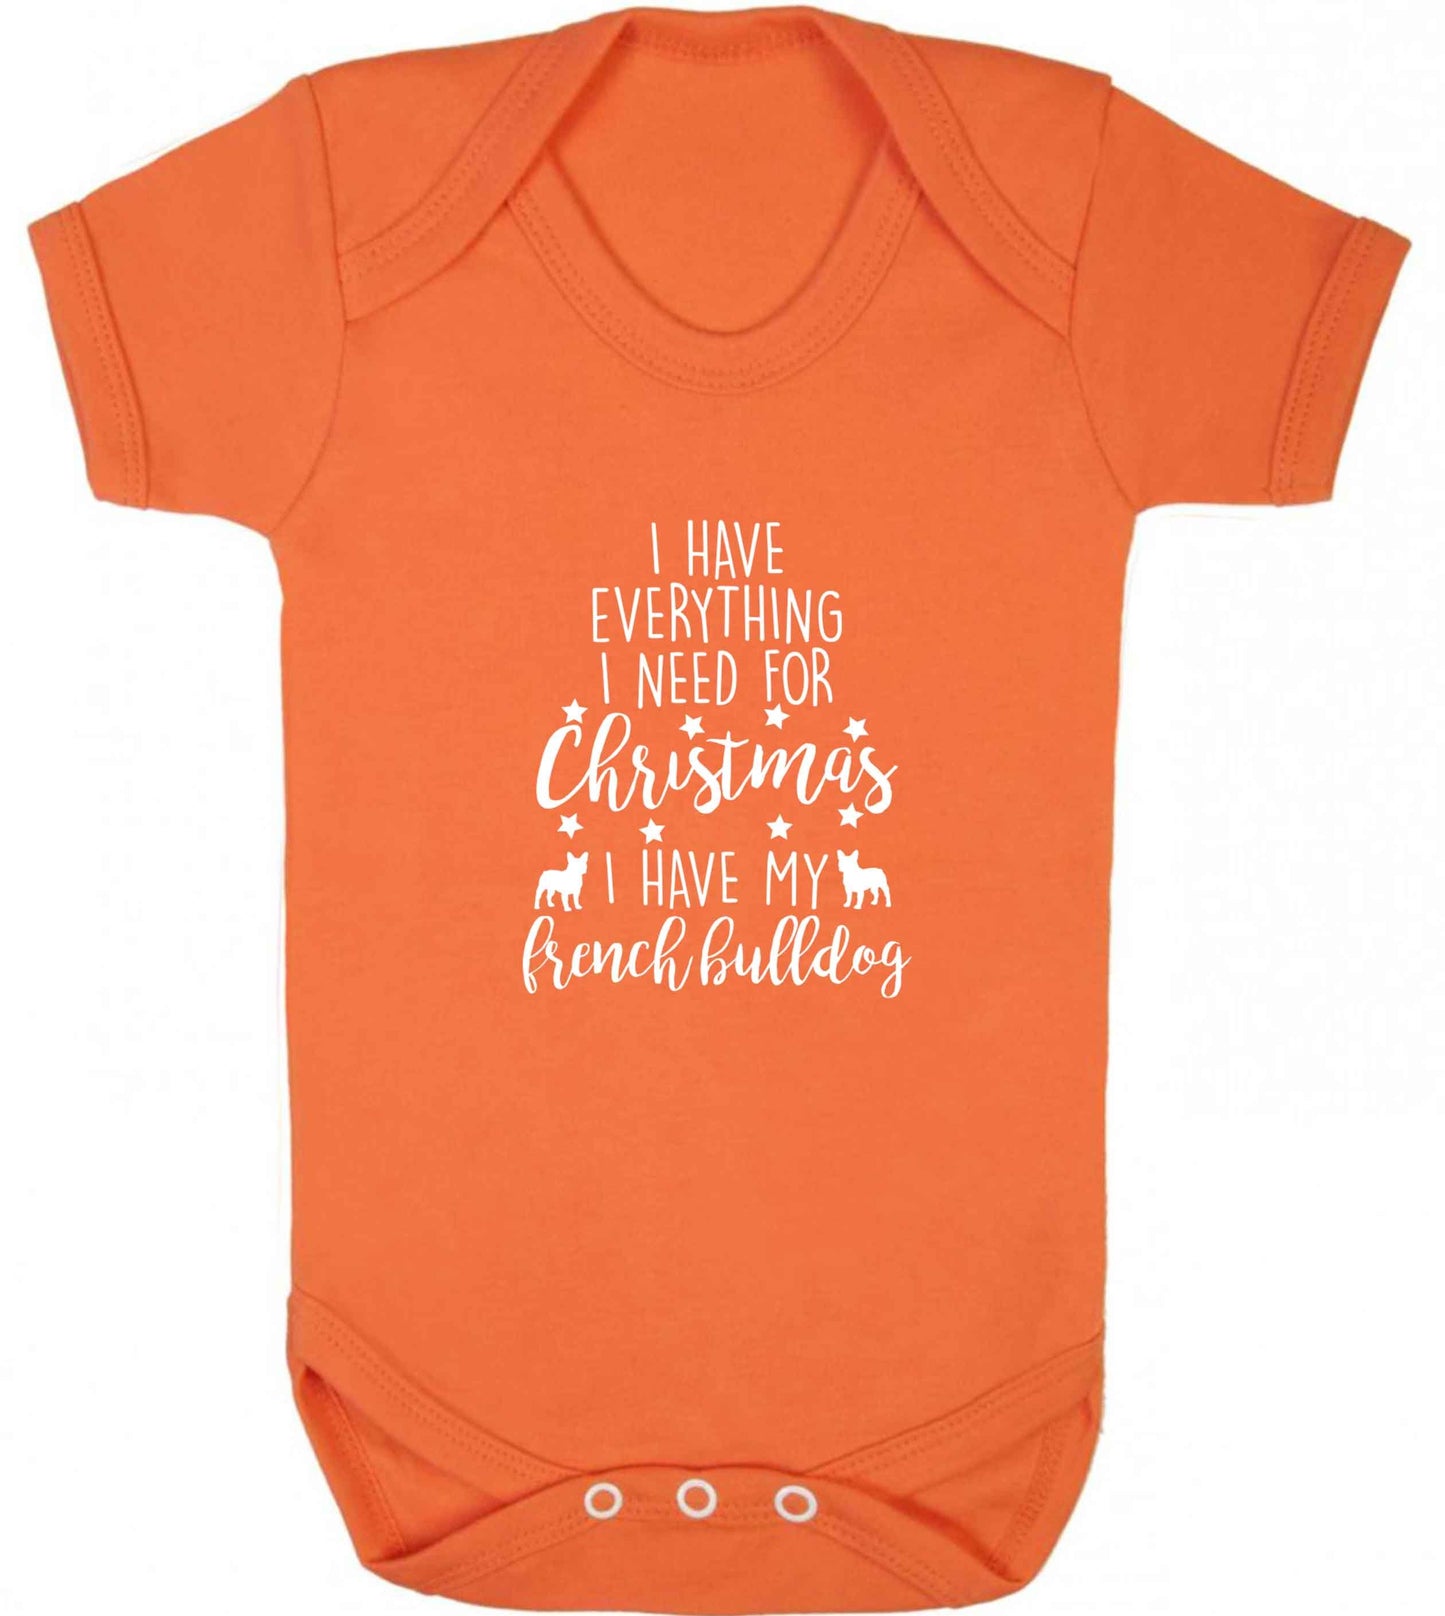 I have everything I need for Christmas I have my french bulldog baby vest orange 18-24 months